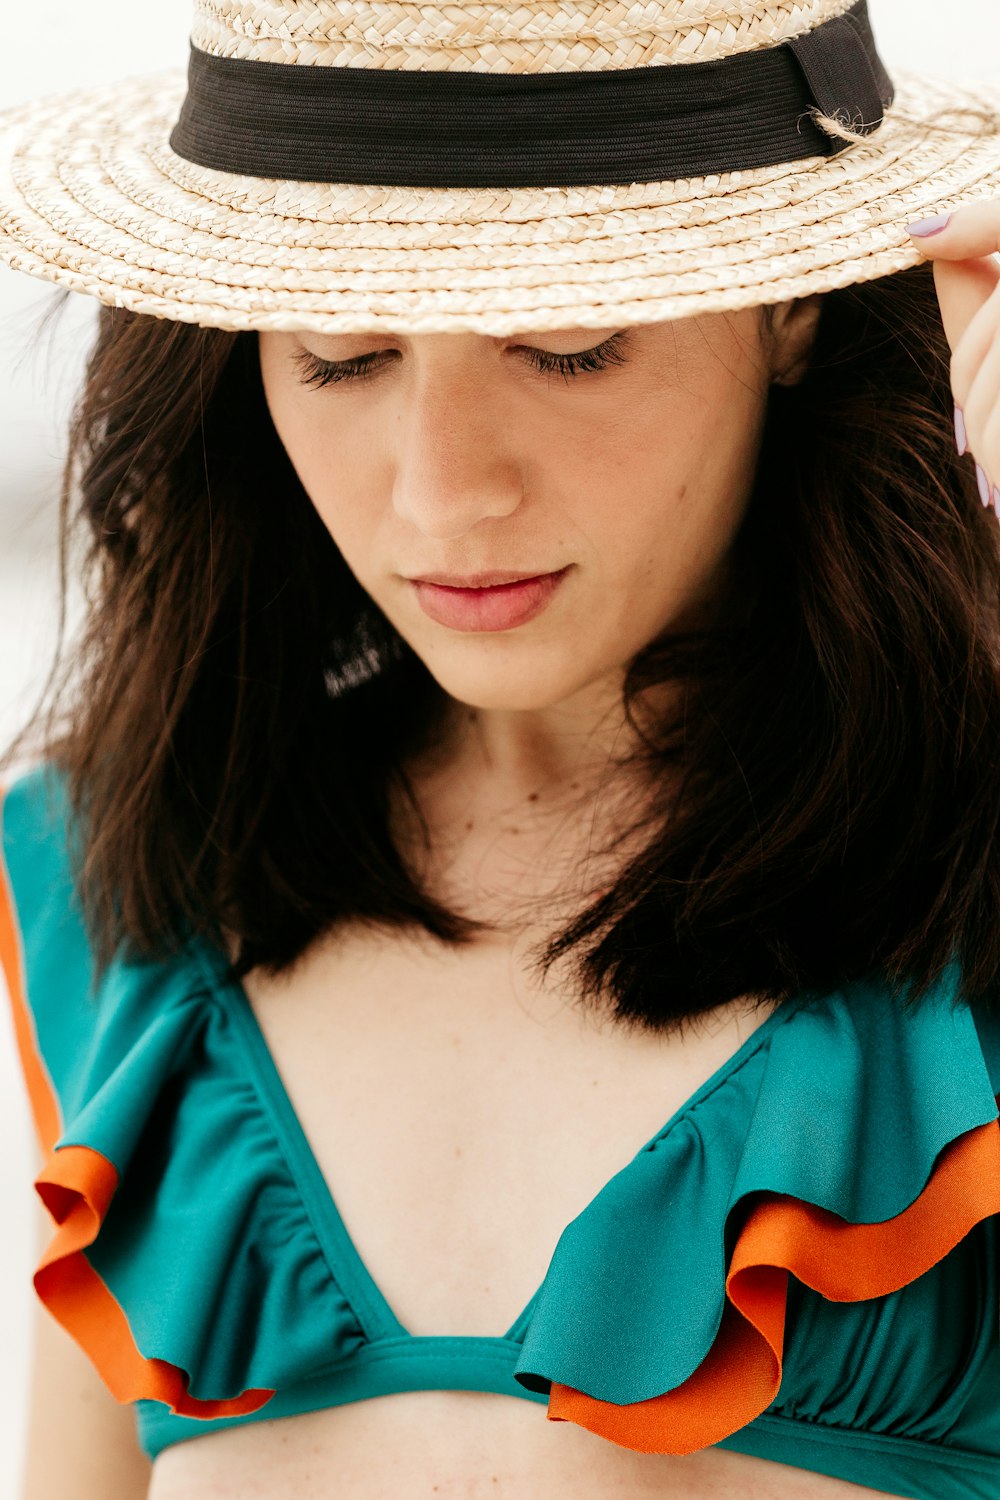 woman in blue shirt wearing white sun hat